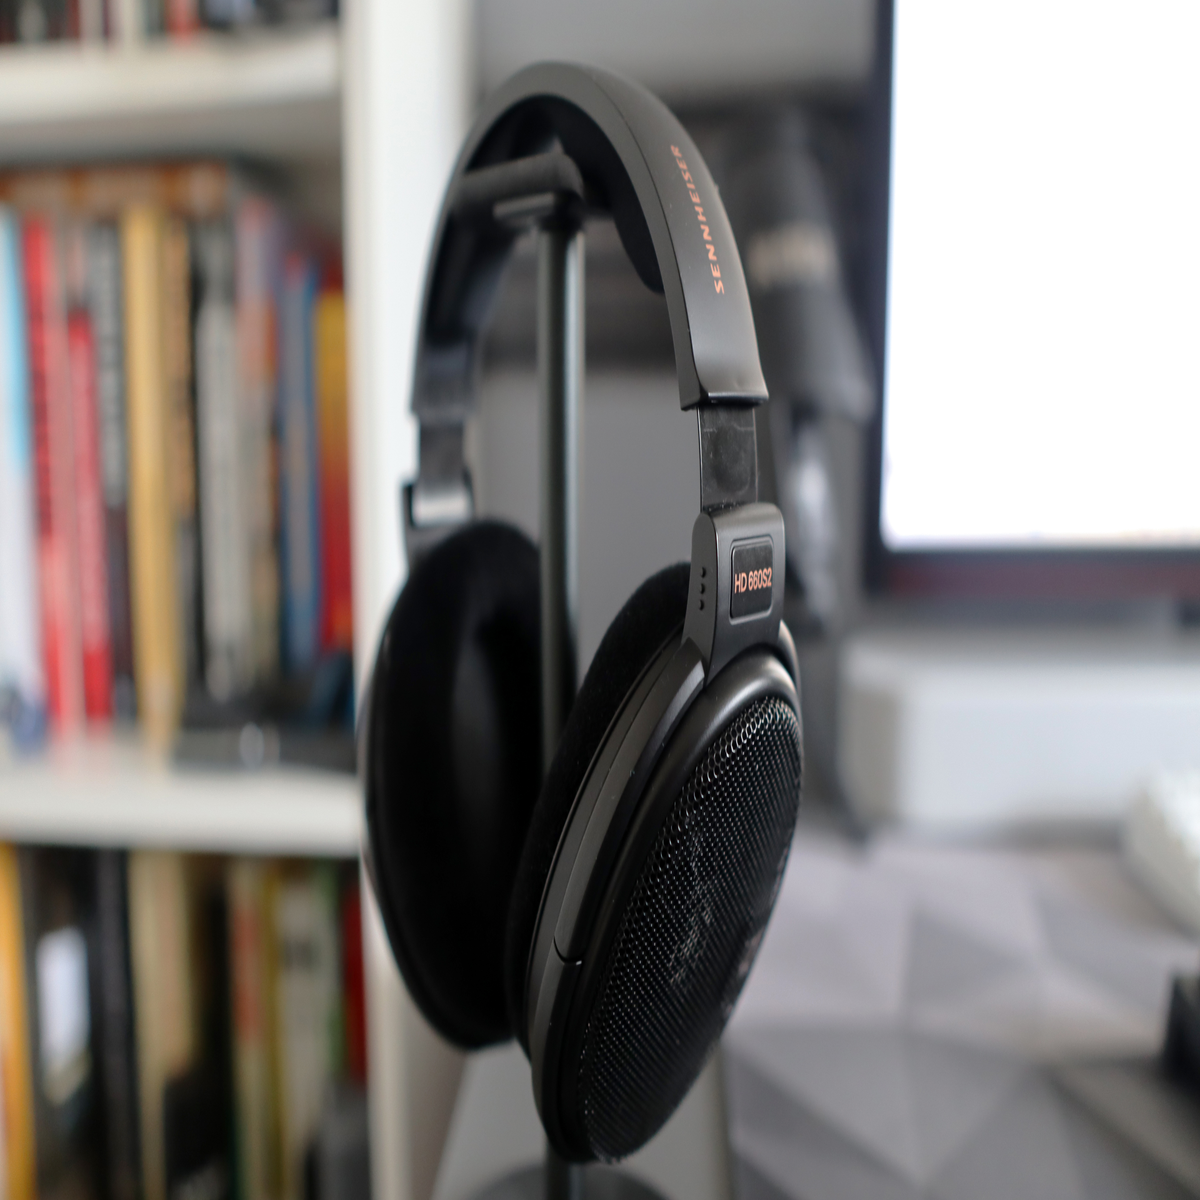 Sennheiser HD 660S2 headphones offer more high-end low end